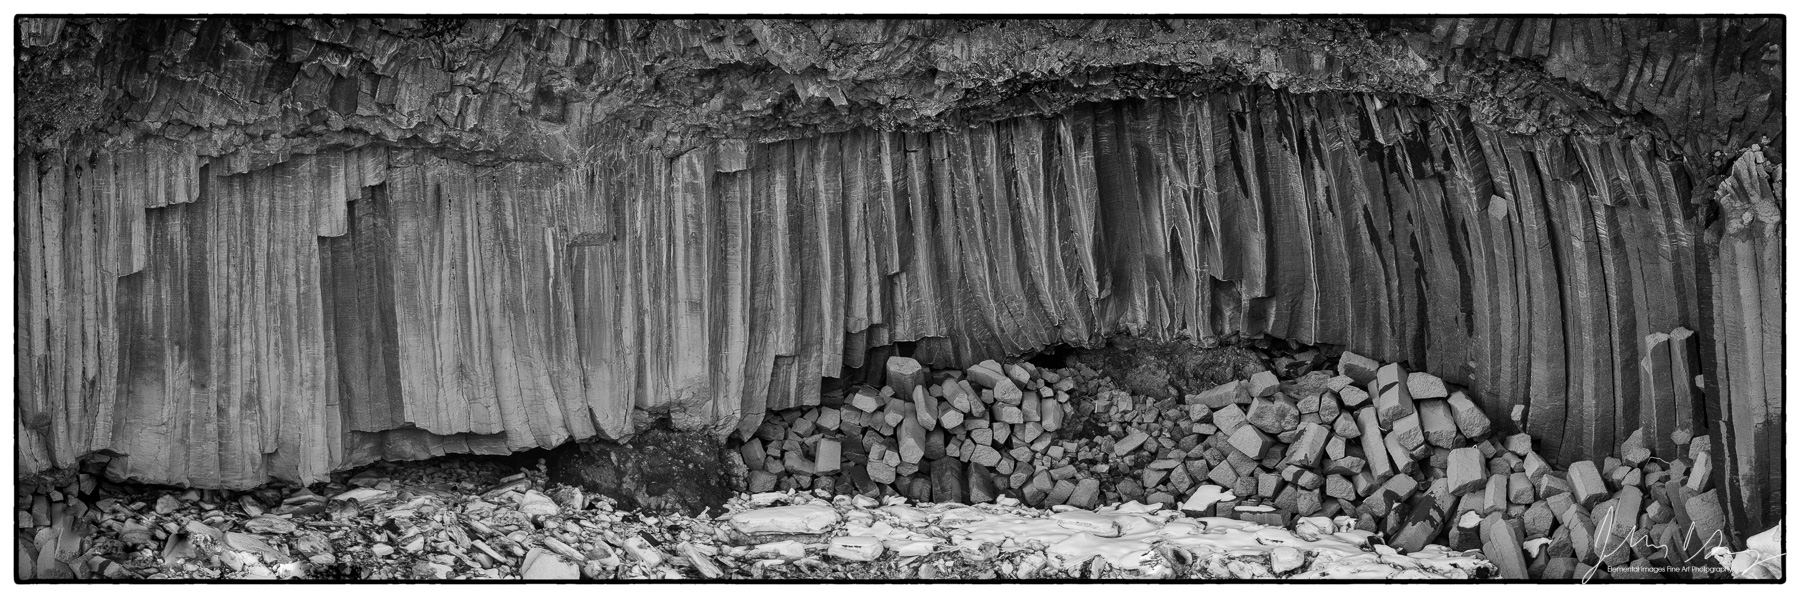 Basalt Columns detail of Aldeyjarfoss | Highlands |  | Iceland - © 2024 Elemental Images Fine Art Photography - All Rights Reserved Worldwide